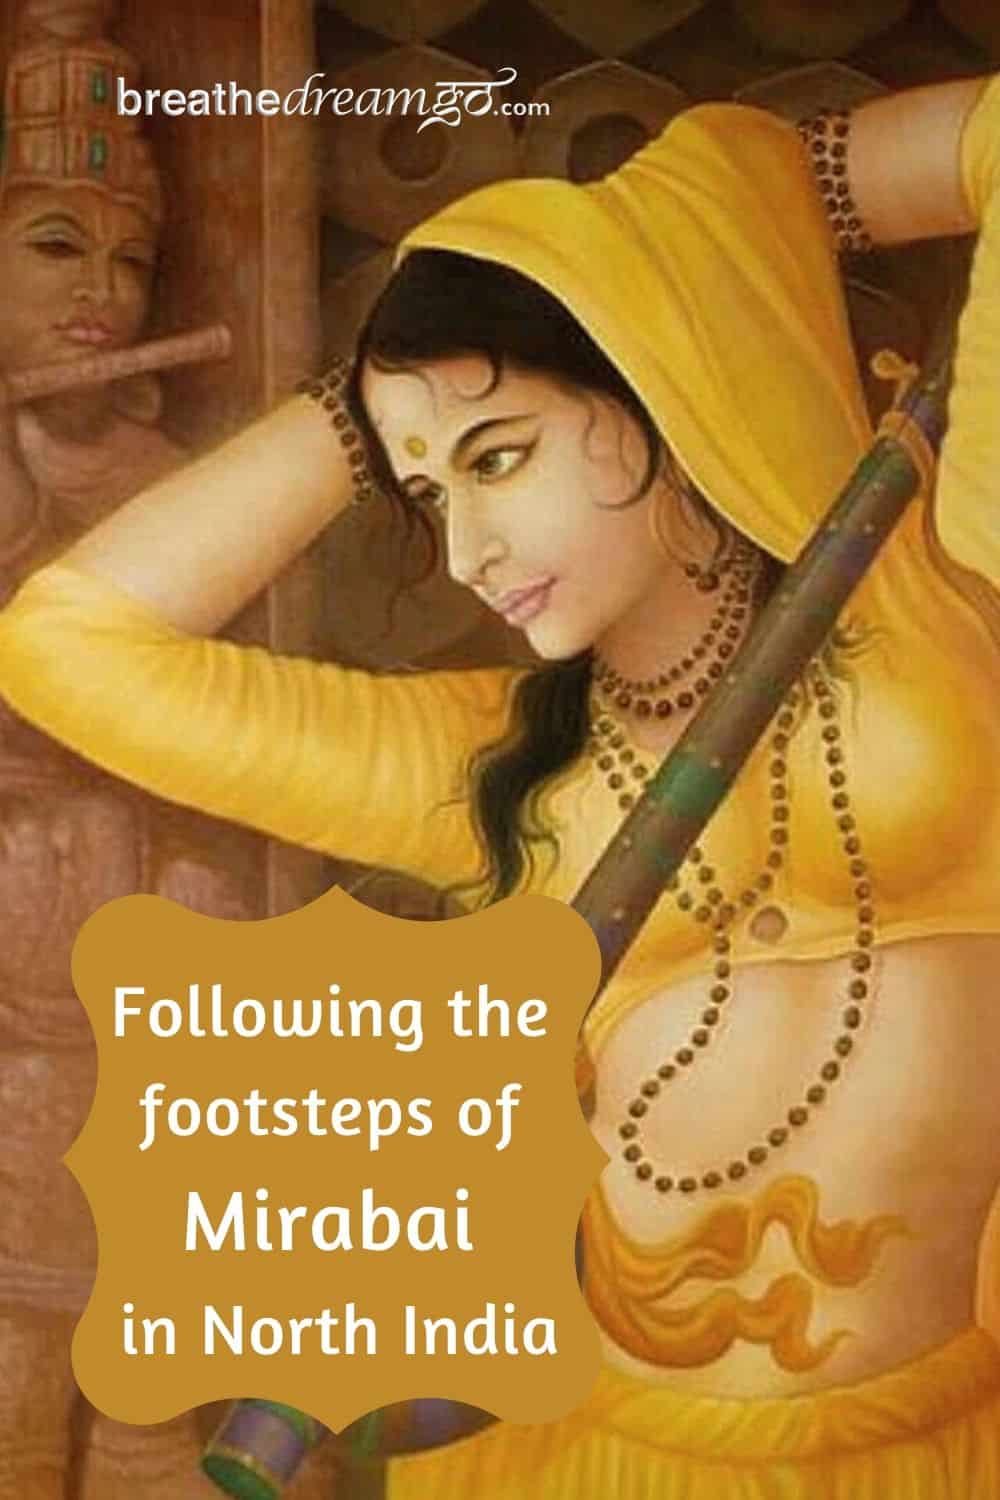 Mirabai journey in India